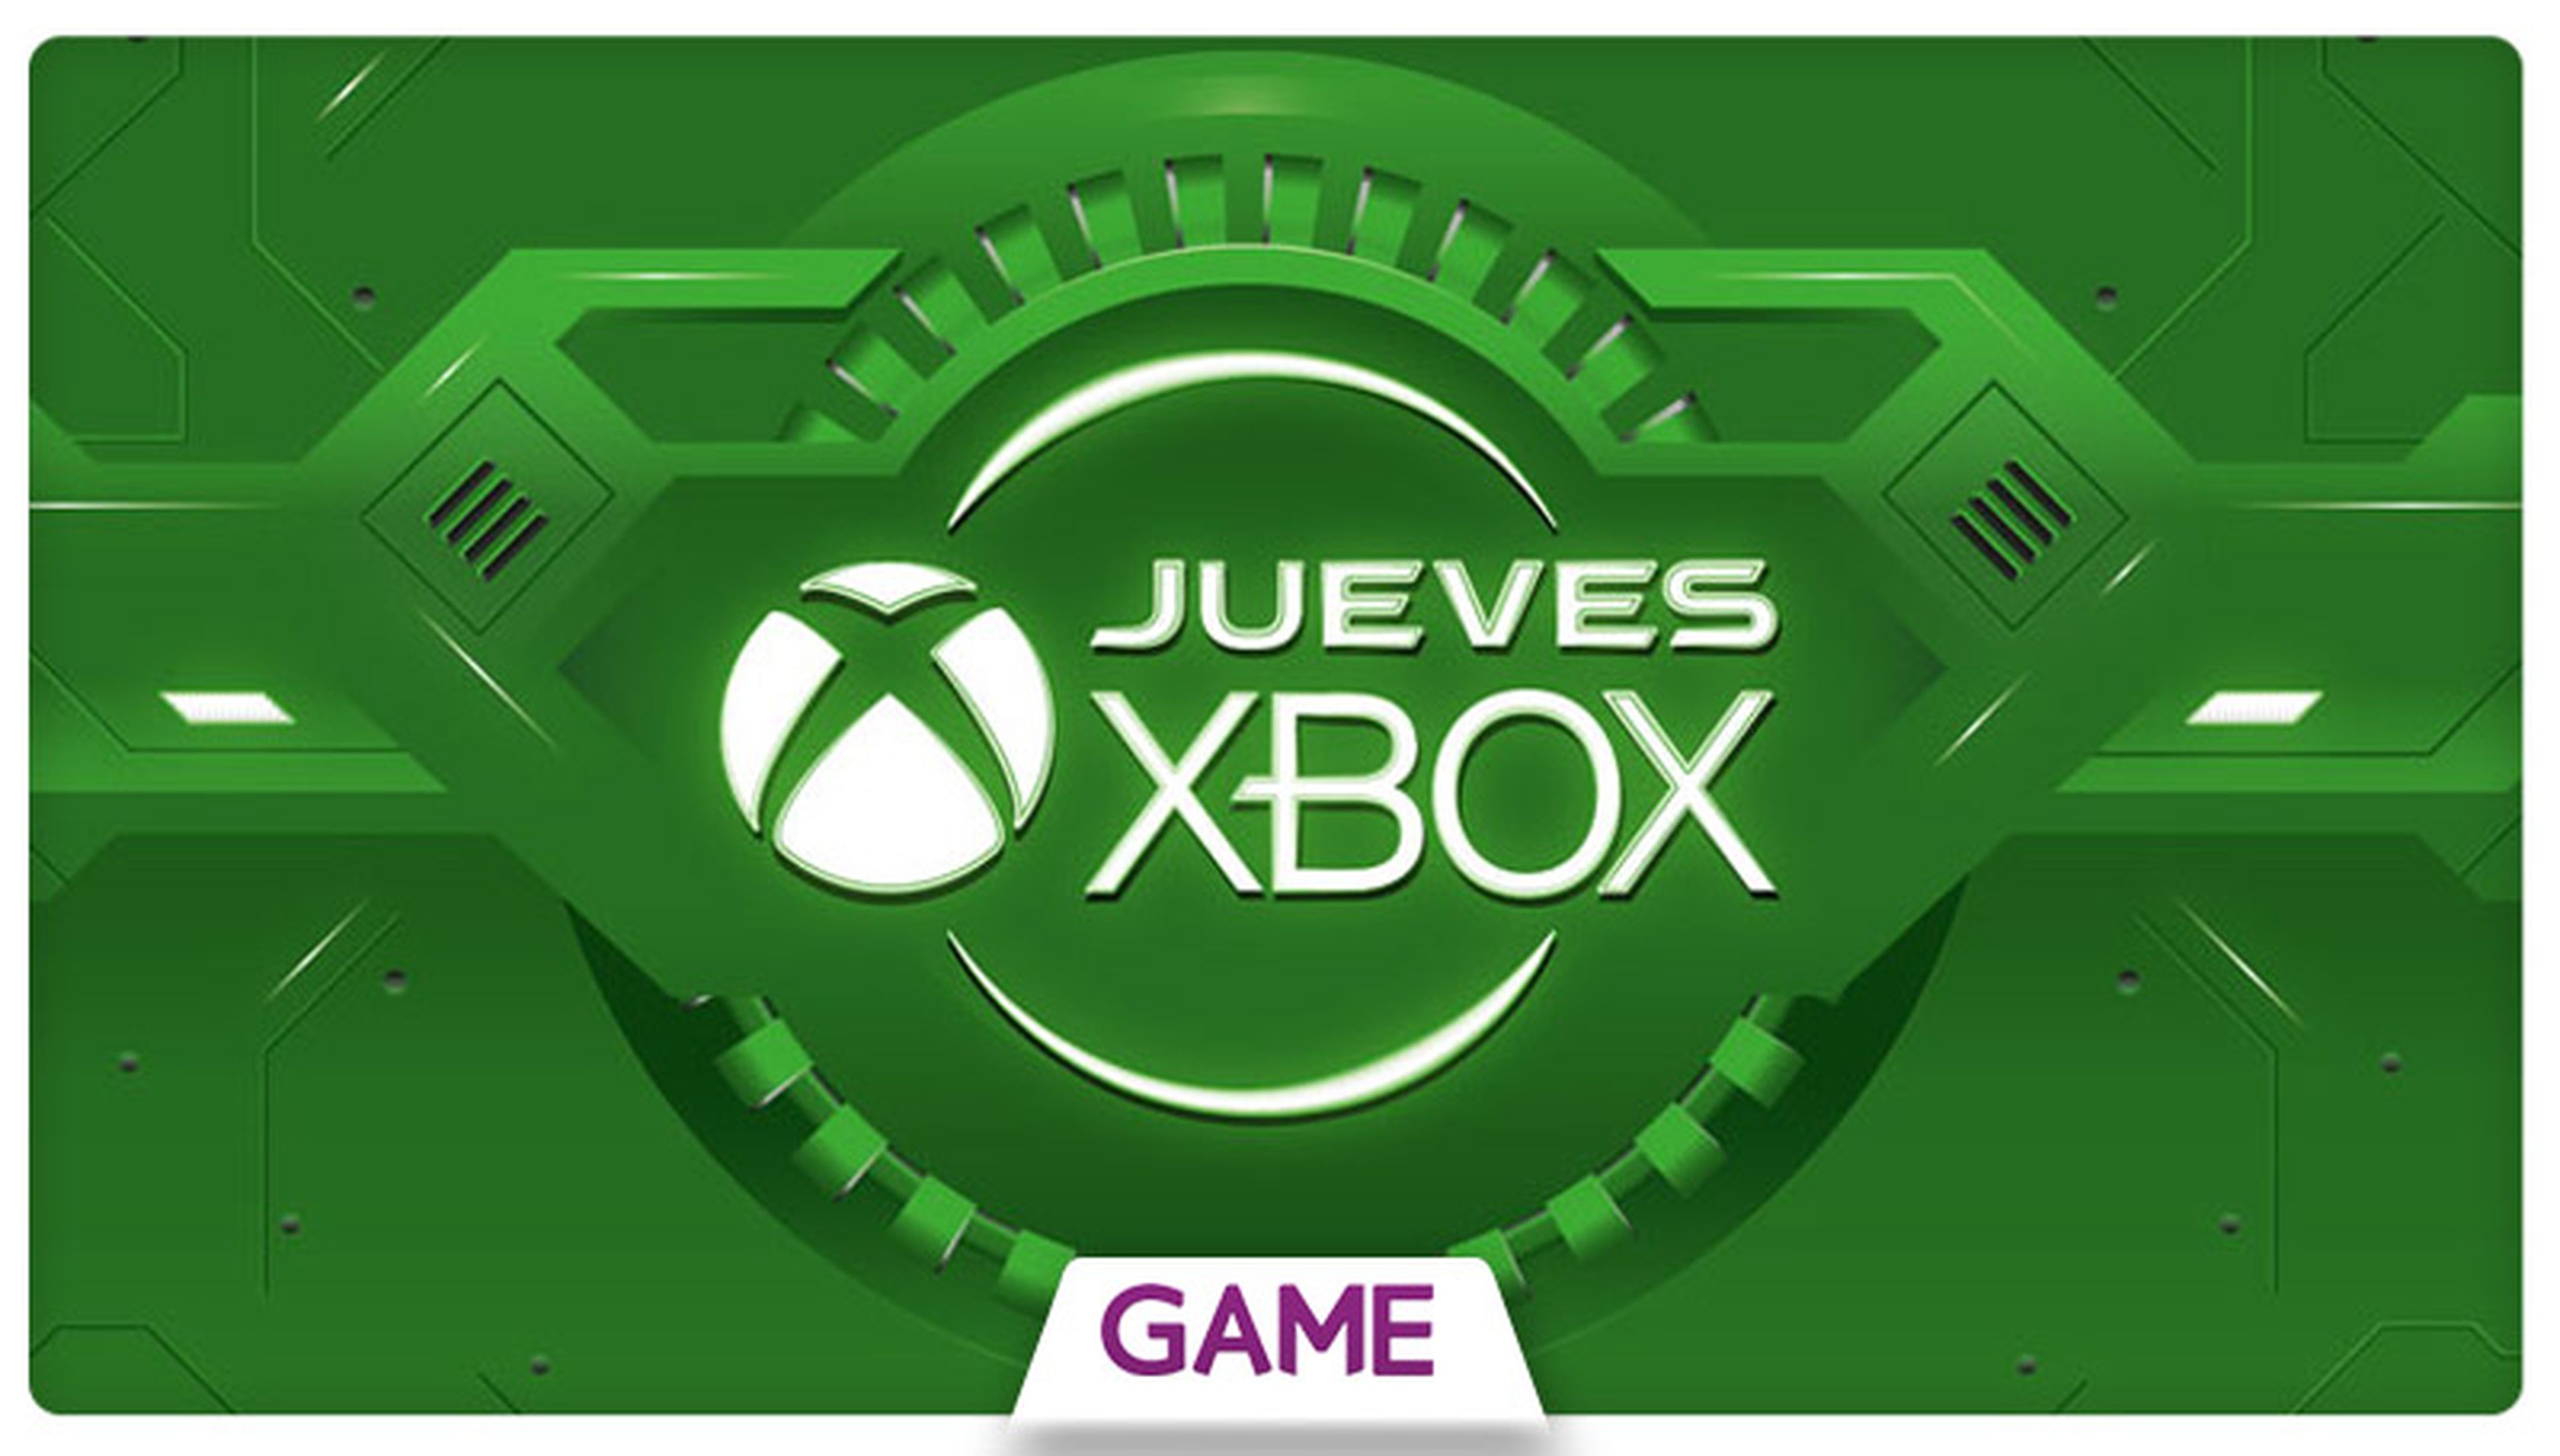 Jueves Xbox en GAME: Decimotercia semana de ofertas